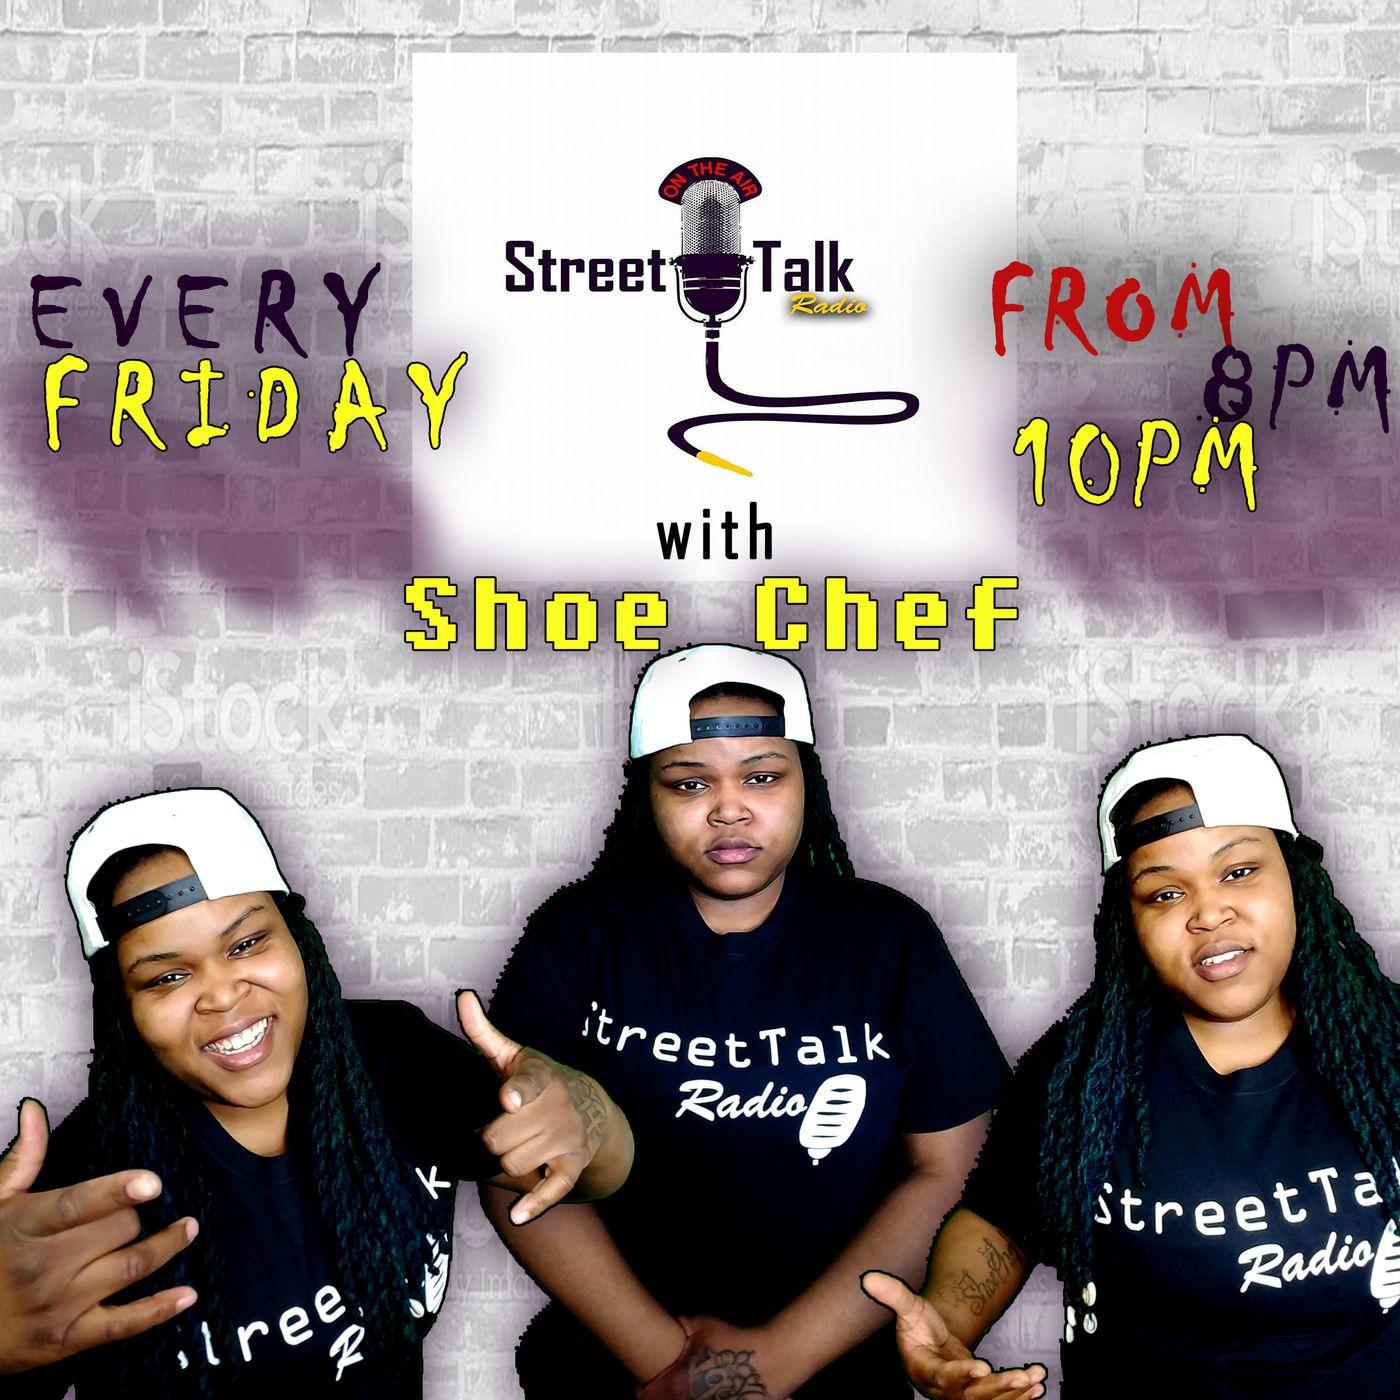 Street Talk Radio's show